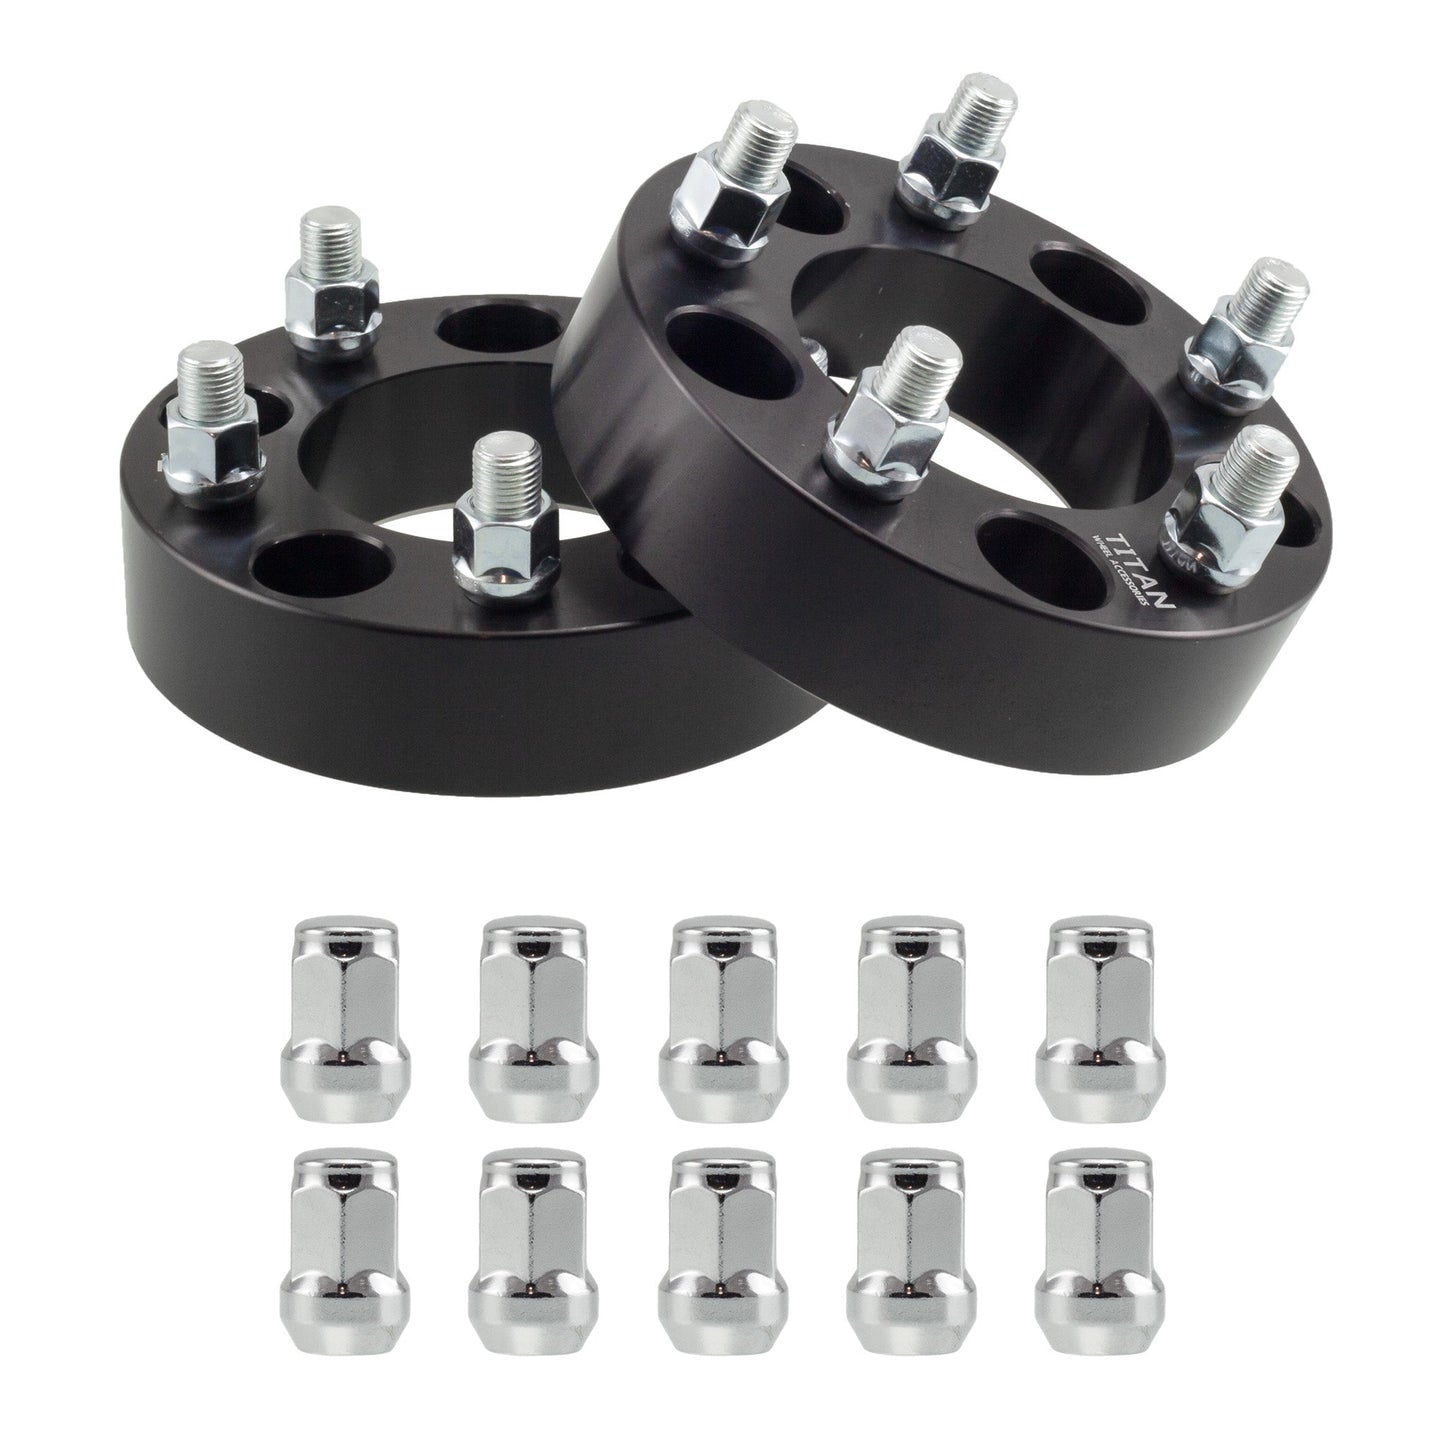 50mm (2") Titan Wheel Spacers for Scion FRS Subaru Impreza BRZ | 5x100 | 56.1 Hubcentric |12x1.25 Studs | Titan Wheel Accessories